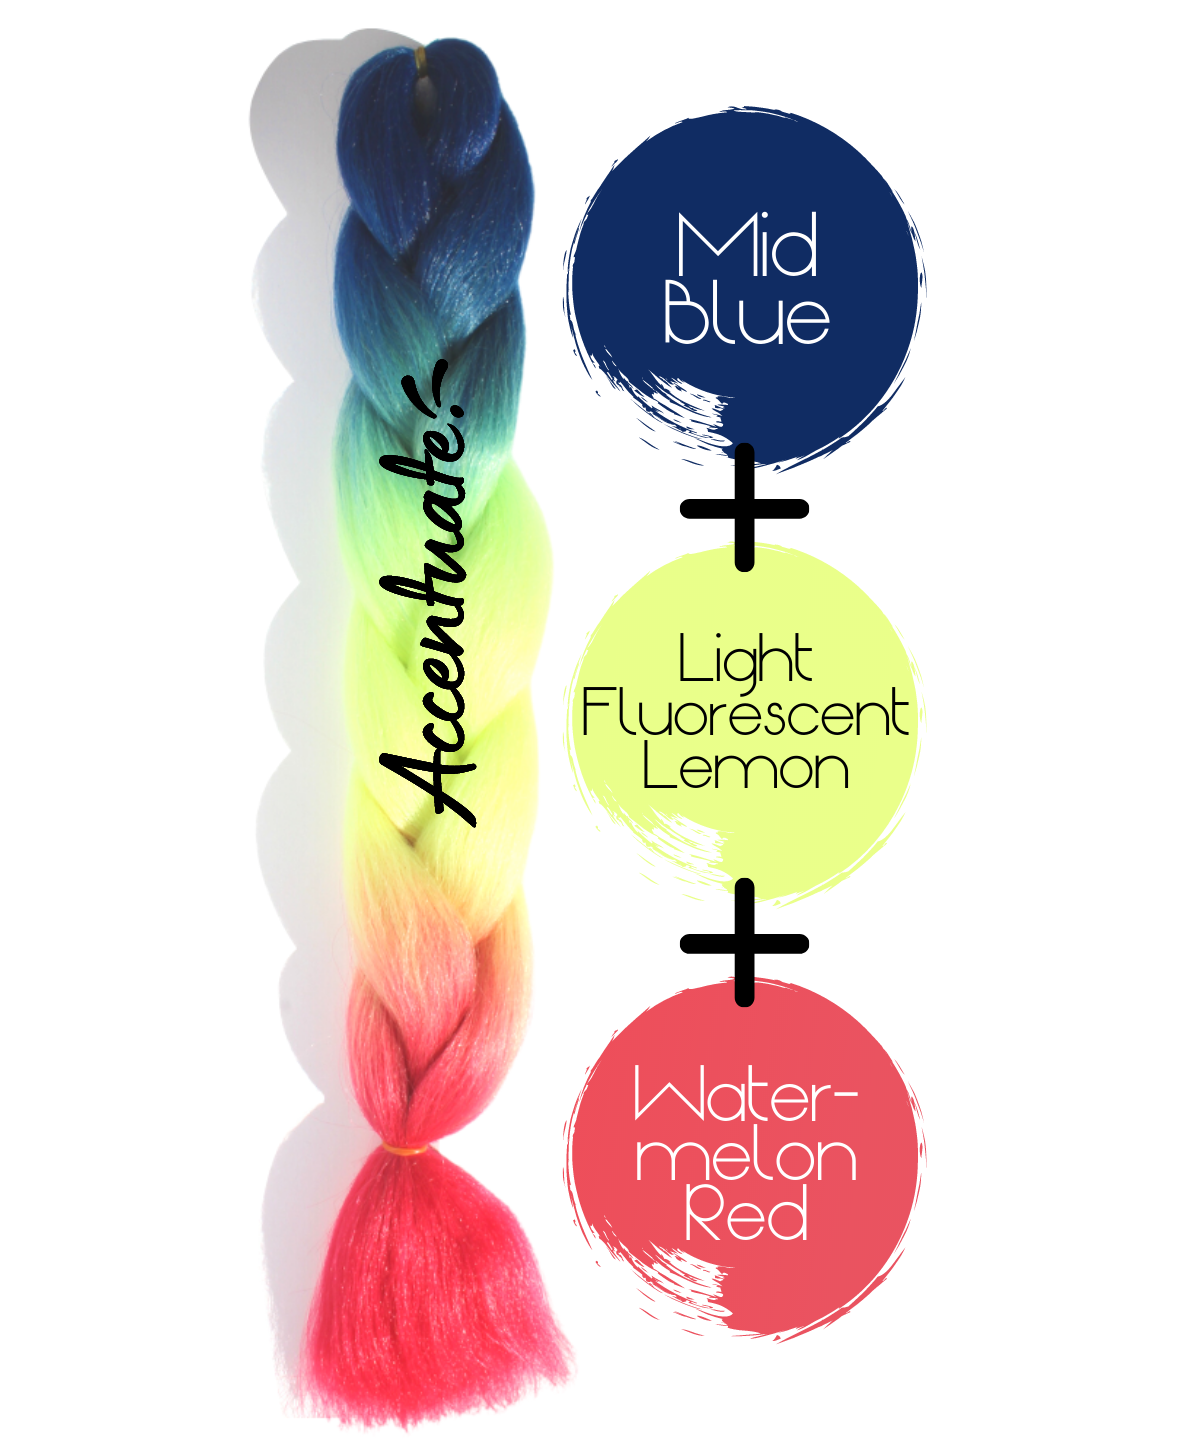 24" Mid Blue + Light Fluorescent Lemon + Watermelon Red Ombré Jumbo Braid Hair Extension